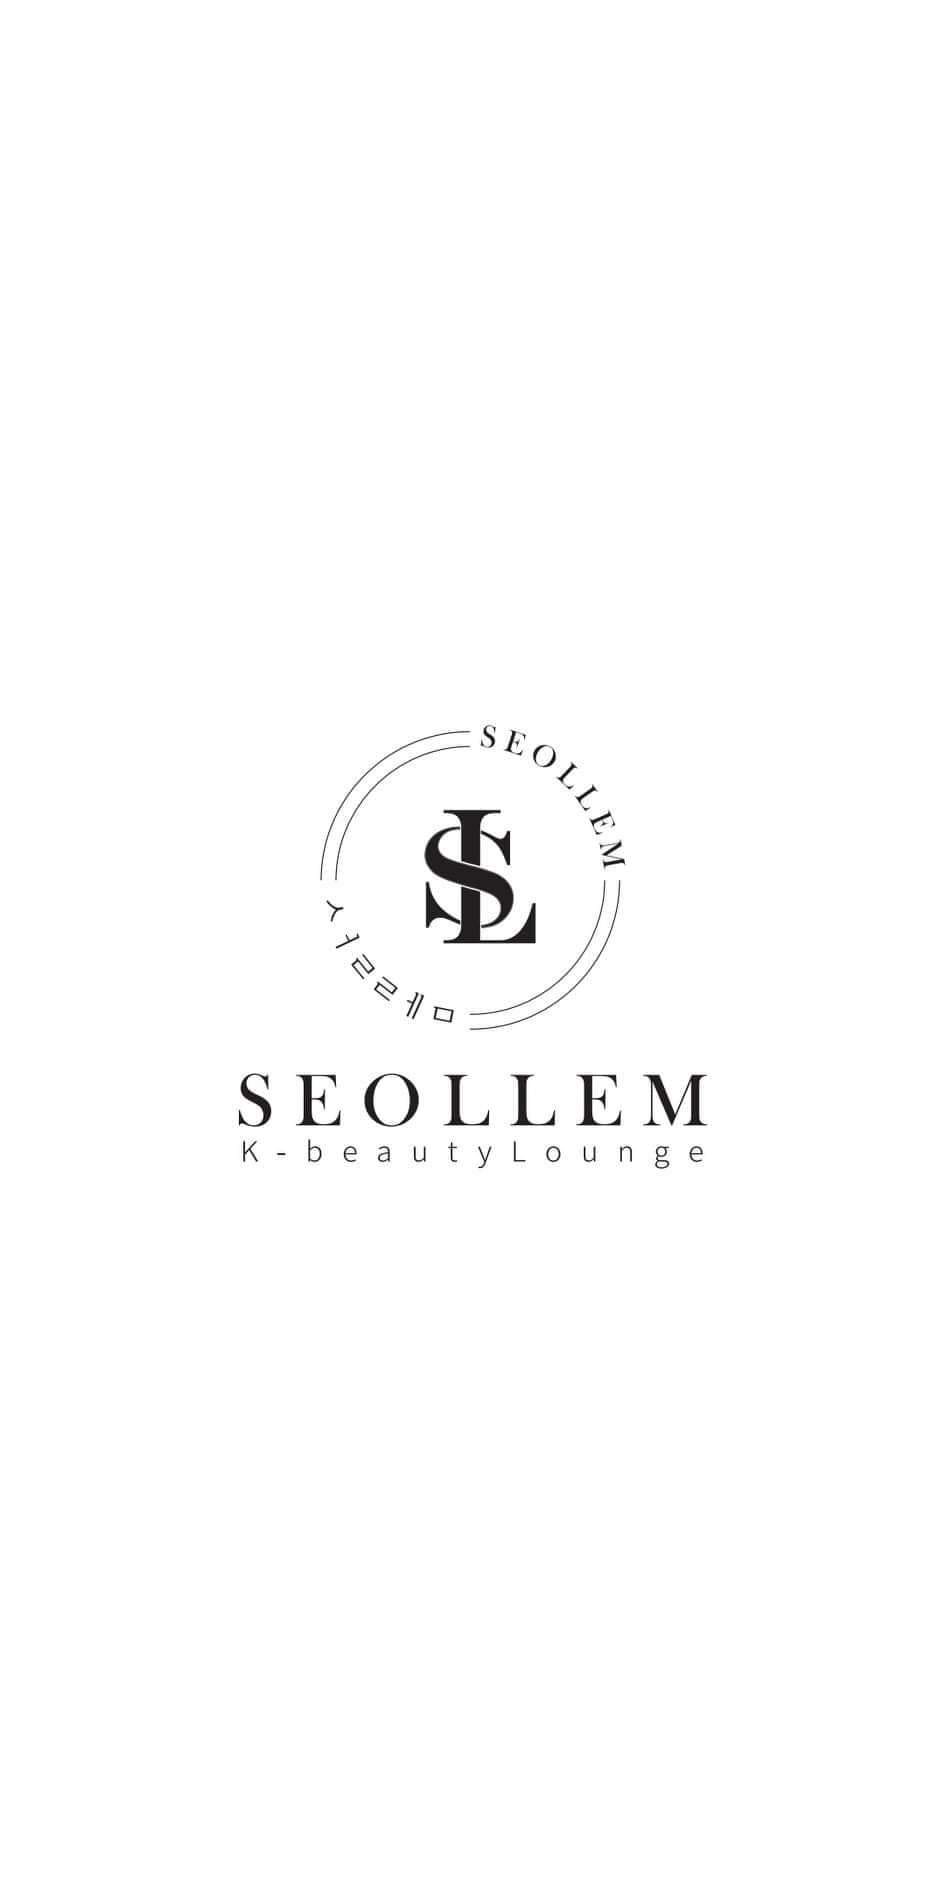 Seollem job hiring image